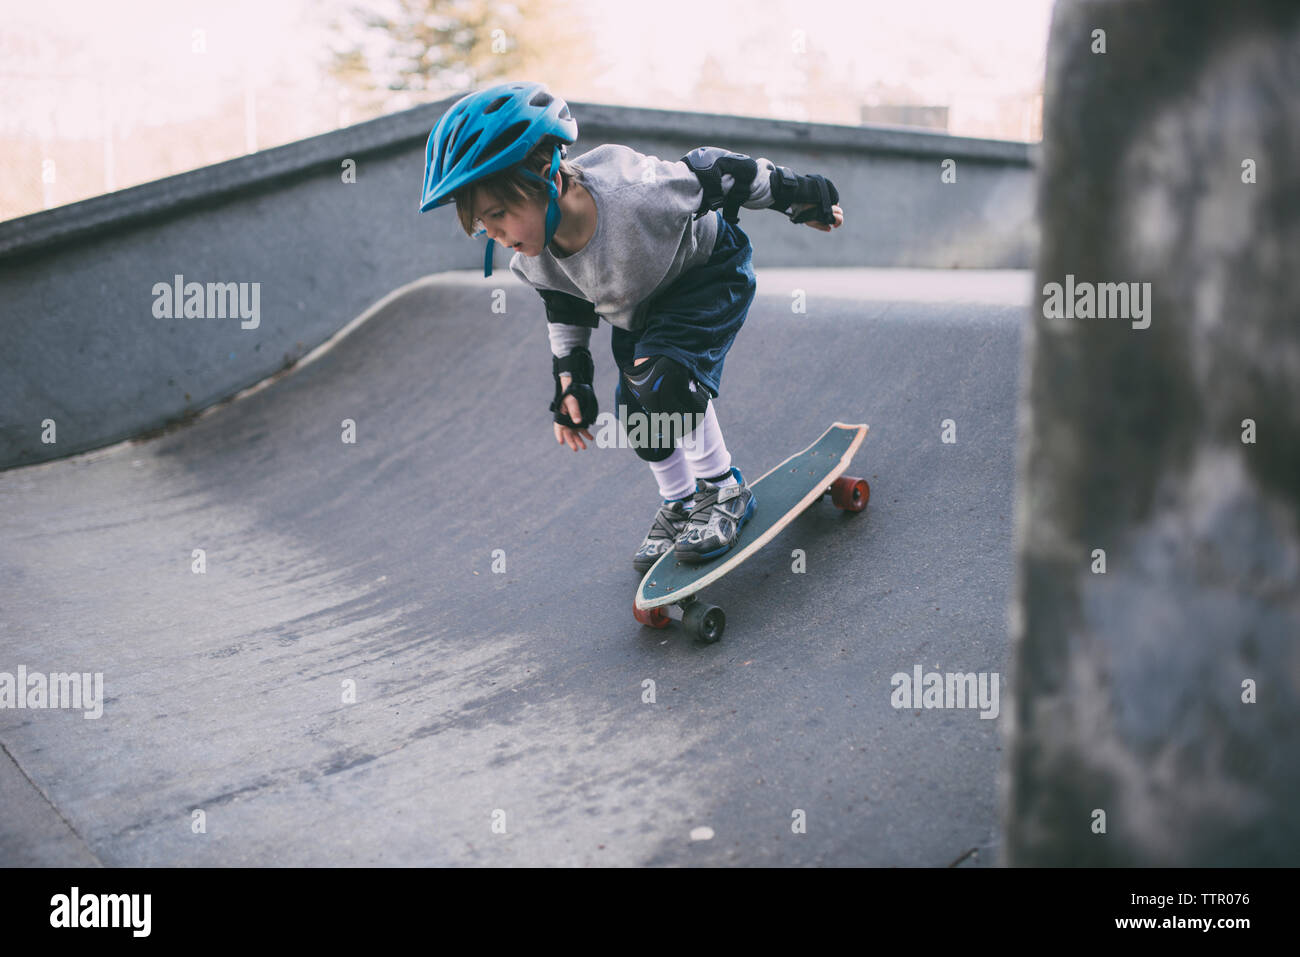 Carefree boy skateboarding on sports ramp at skateboard park Stock Photo